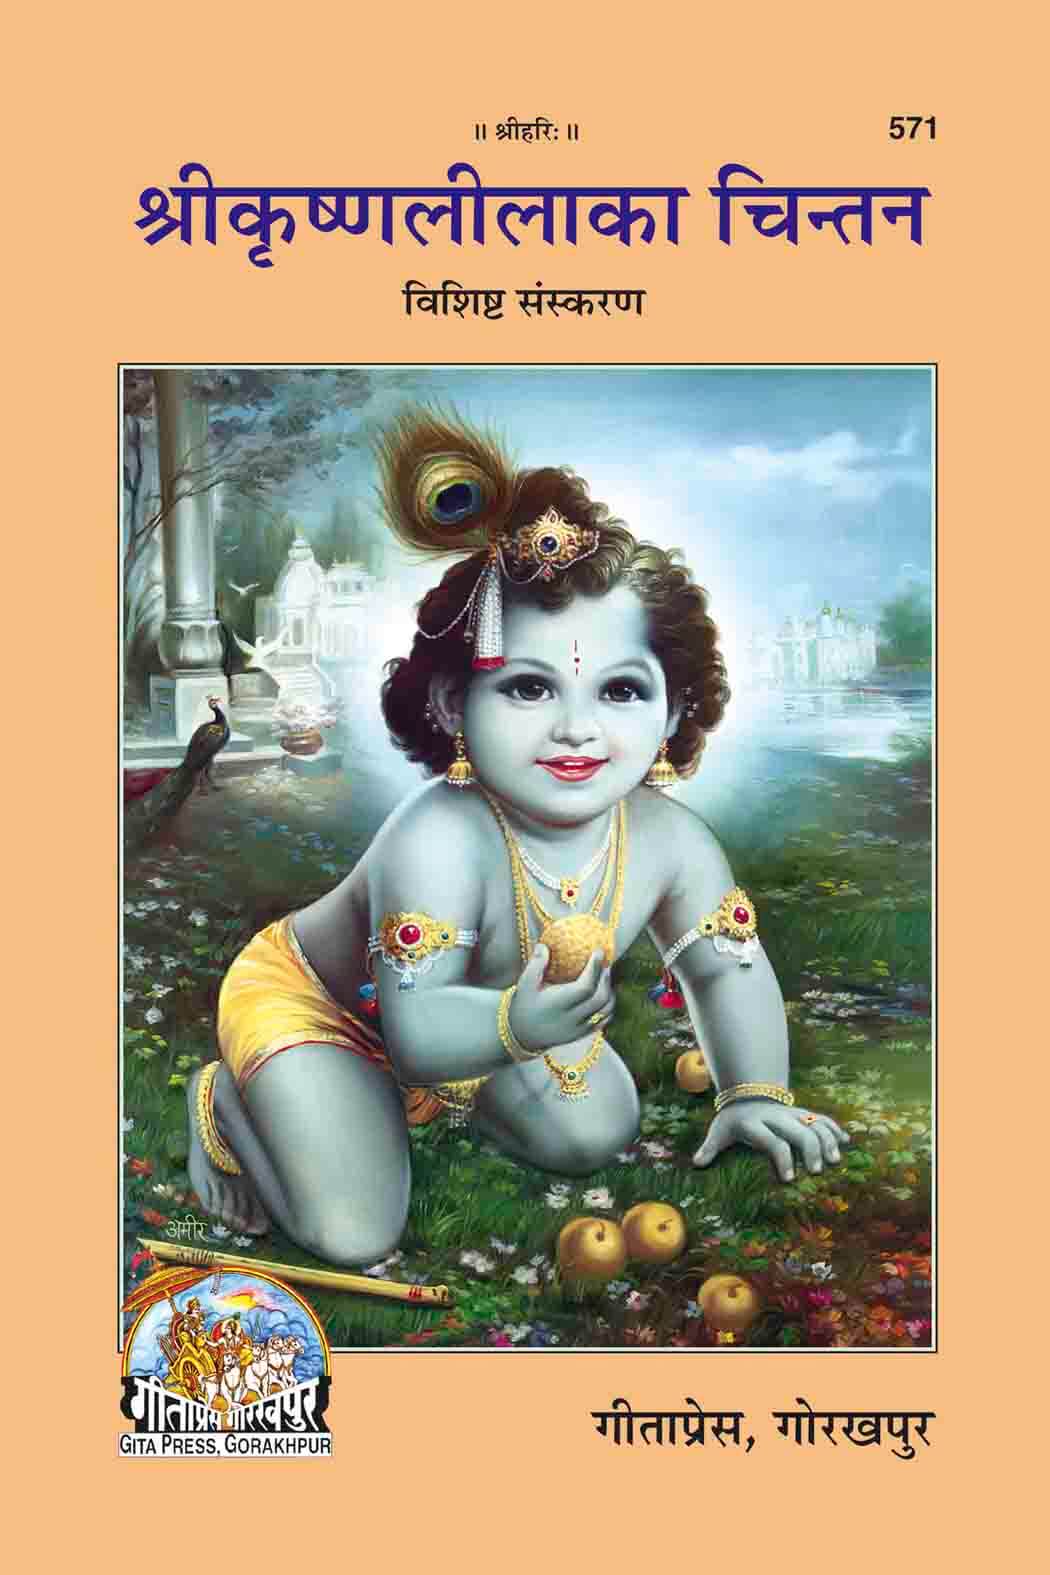 Shri Krishnalila ka Chintan (Musings on the Krishna Lila) by Gita Press